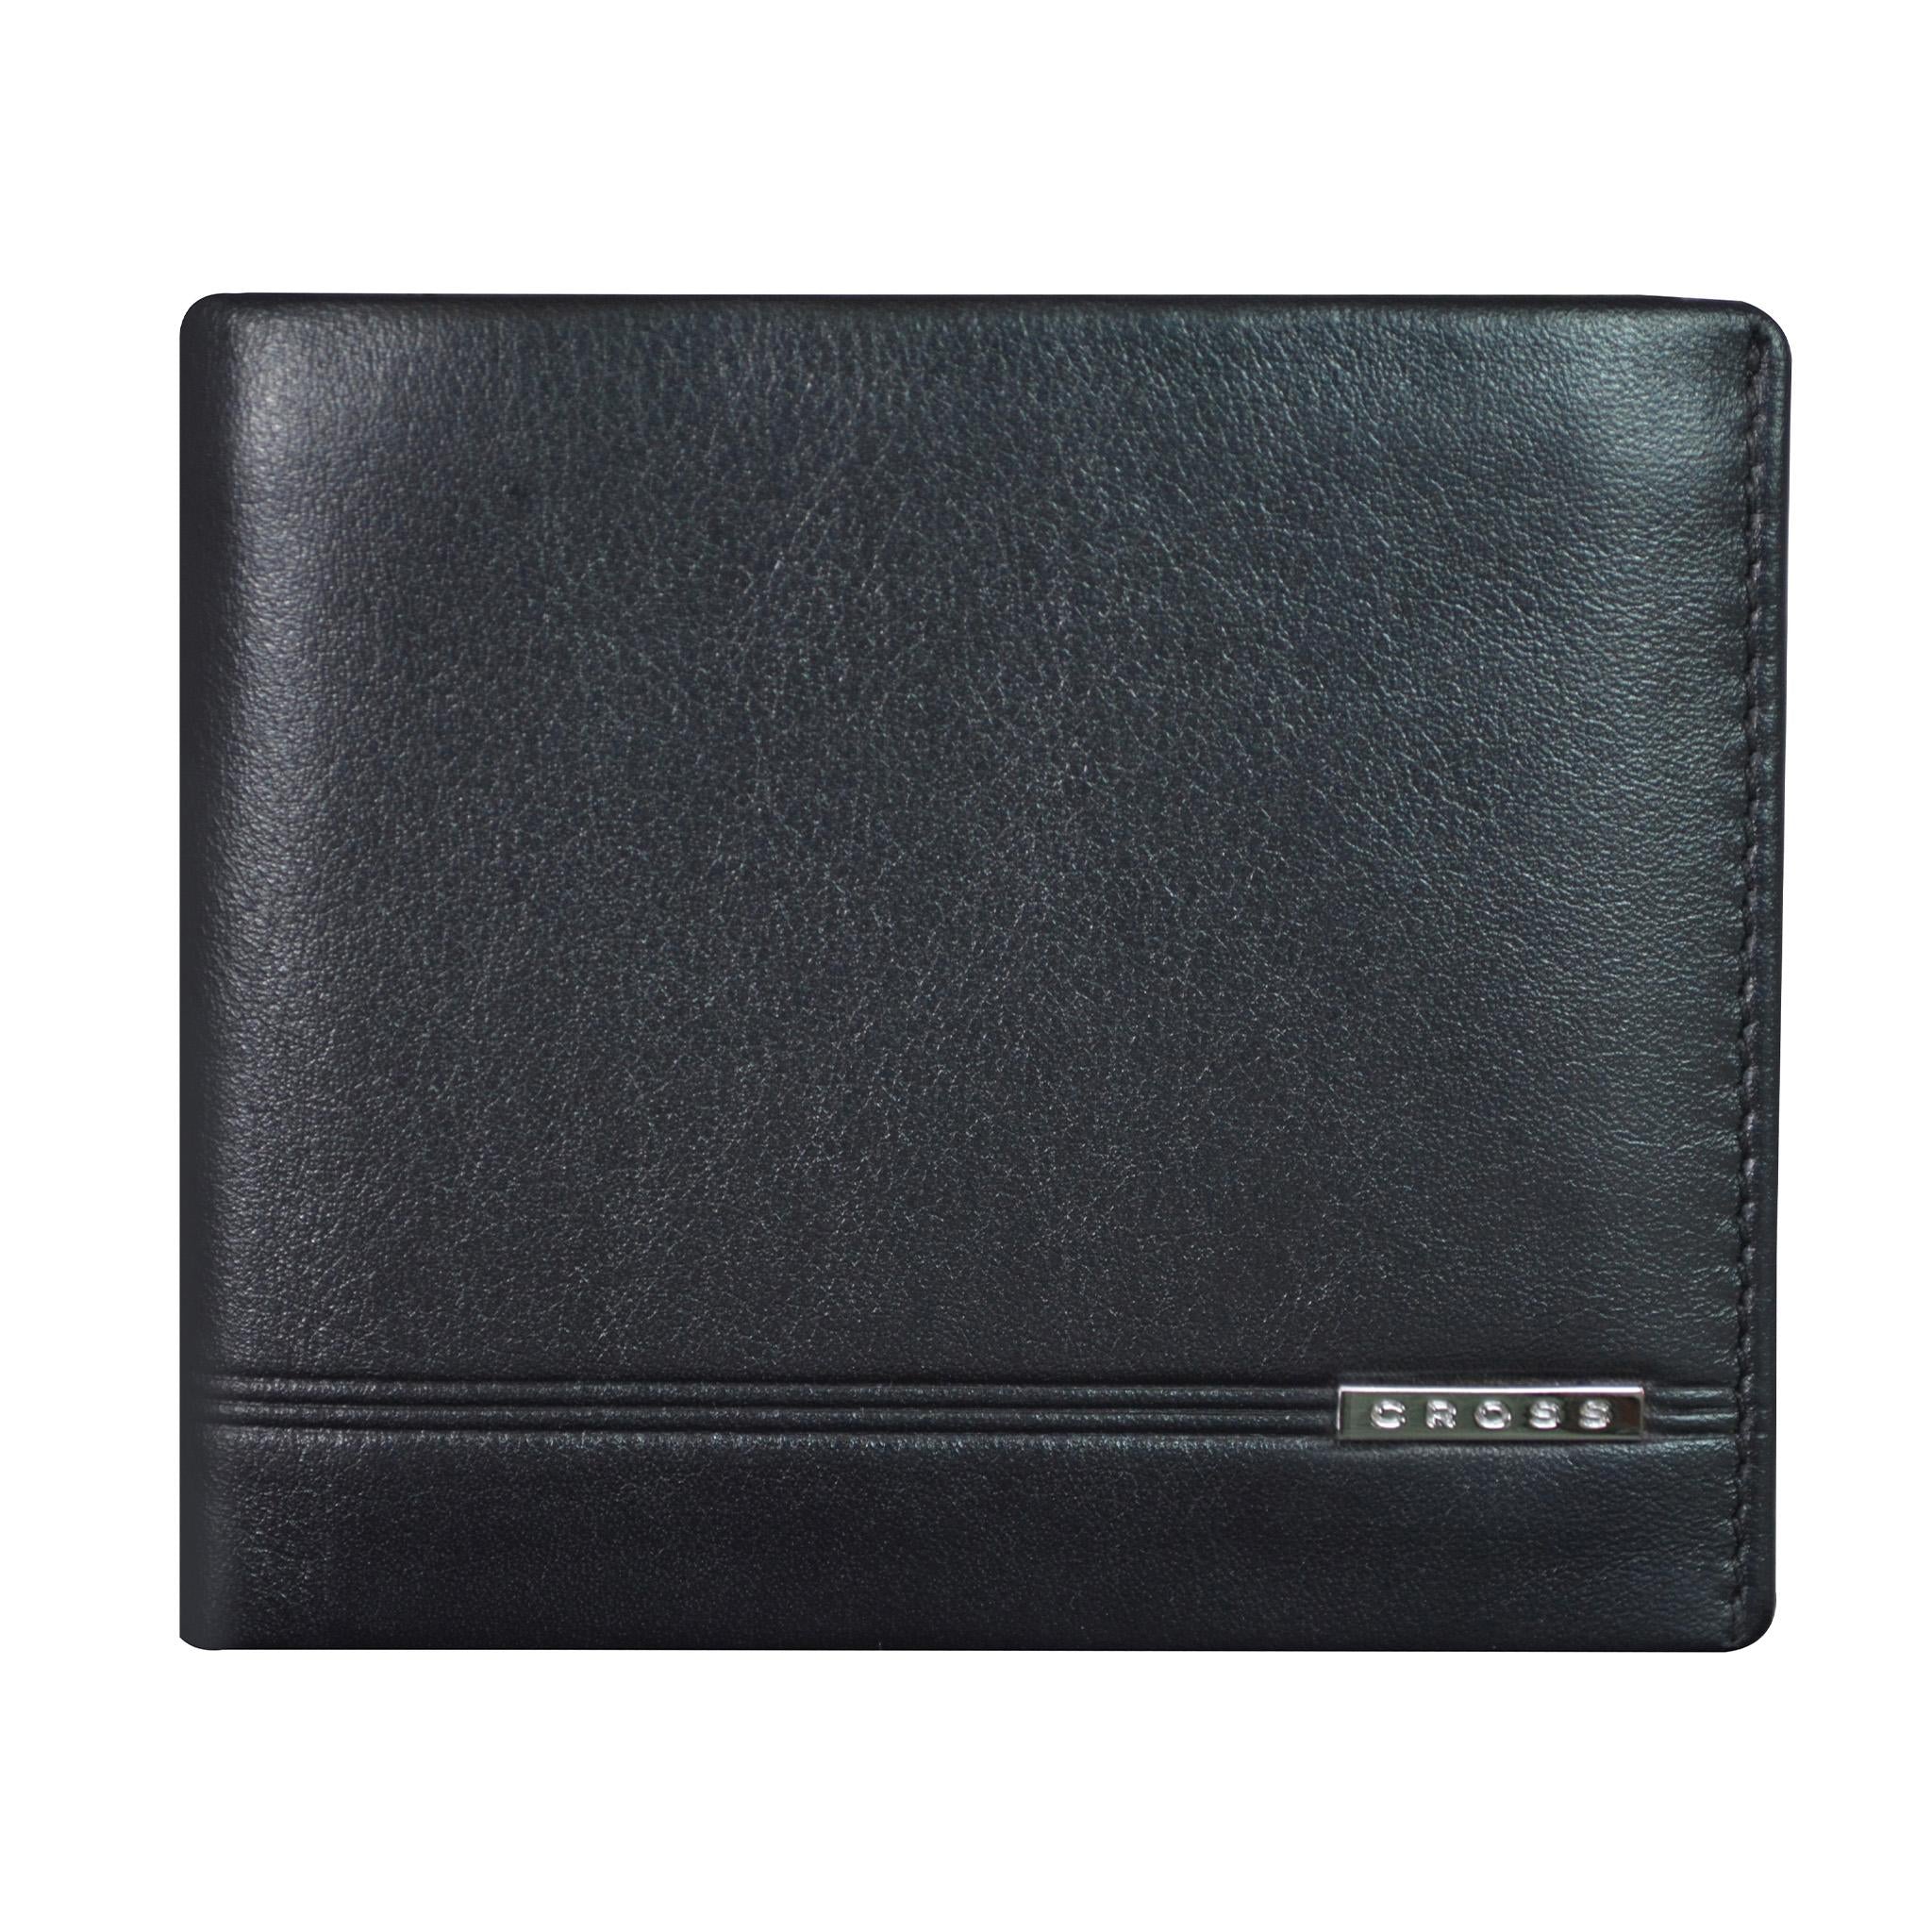 Cross Classic Century Slim Wallet - Black